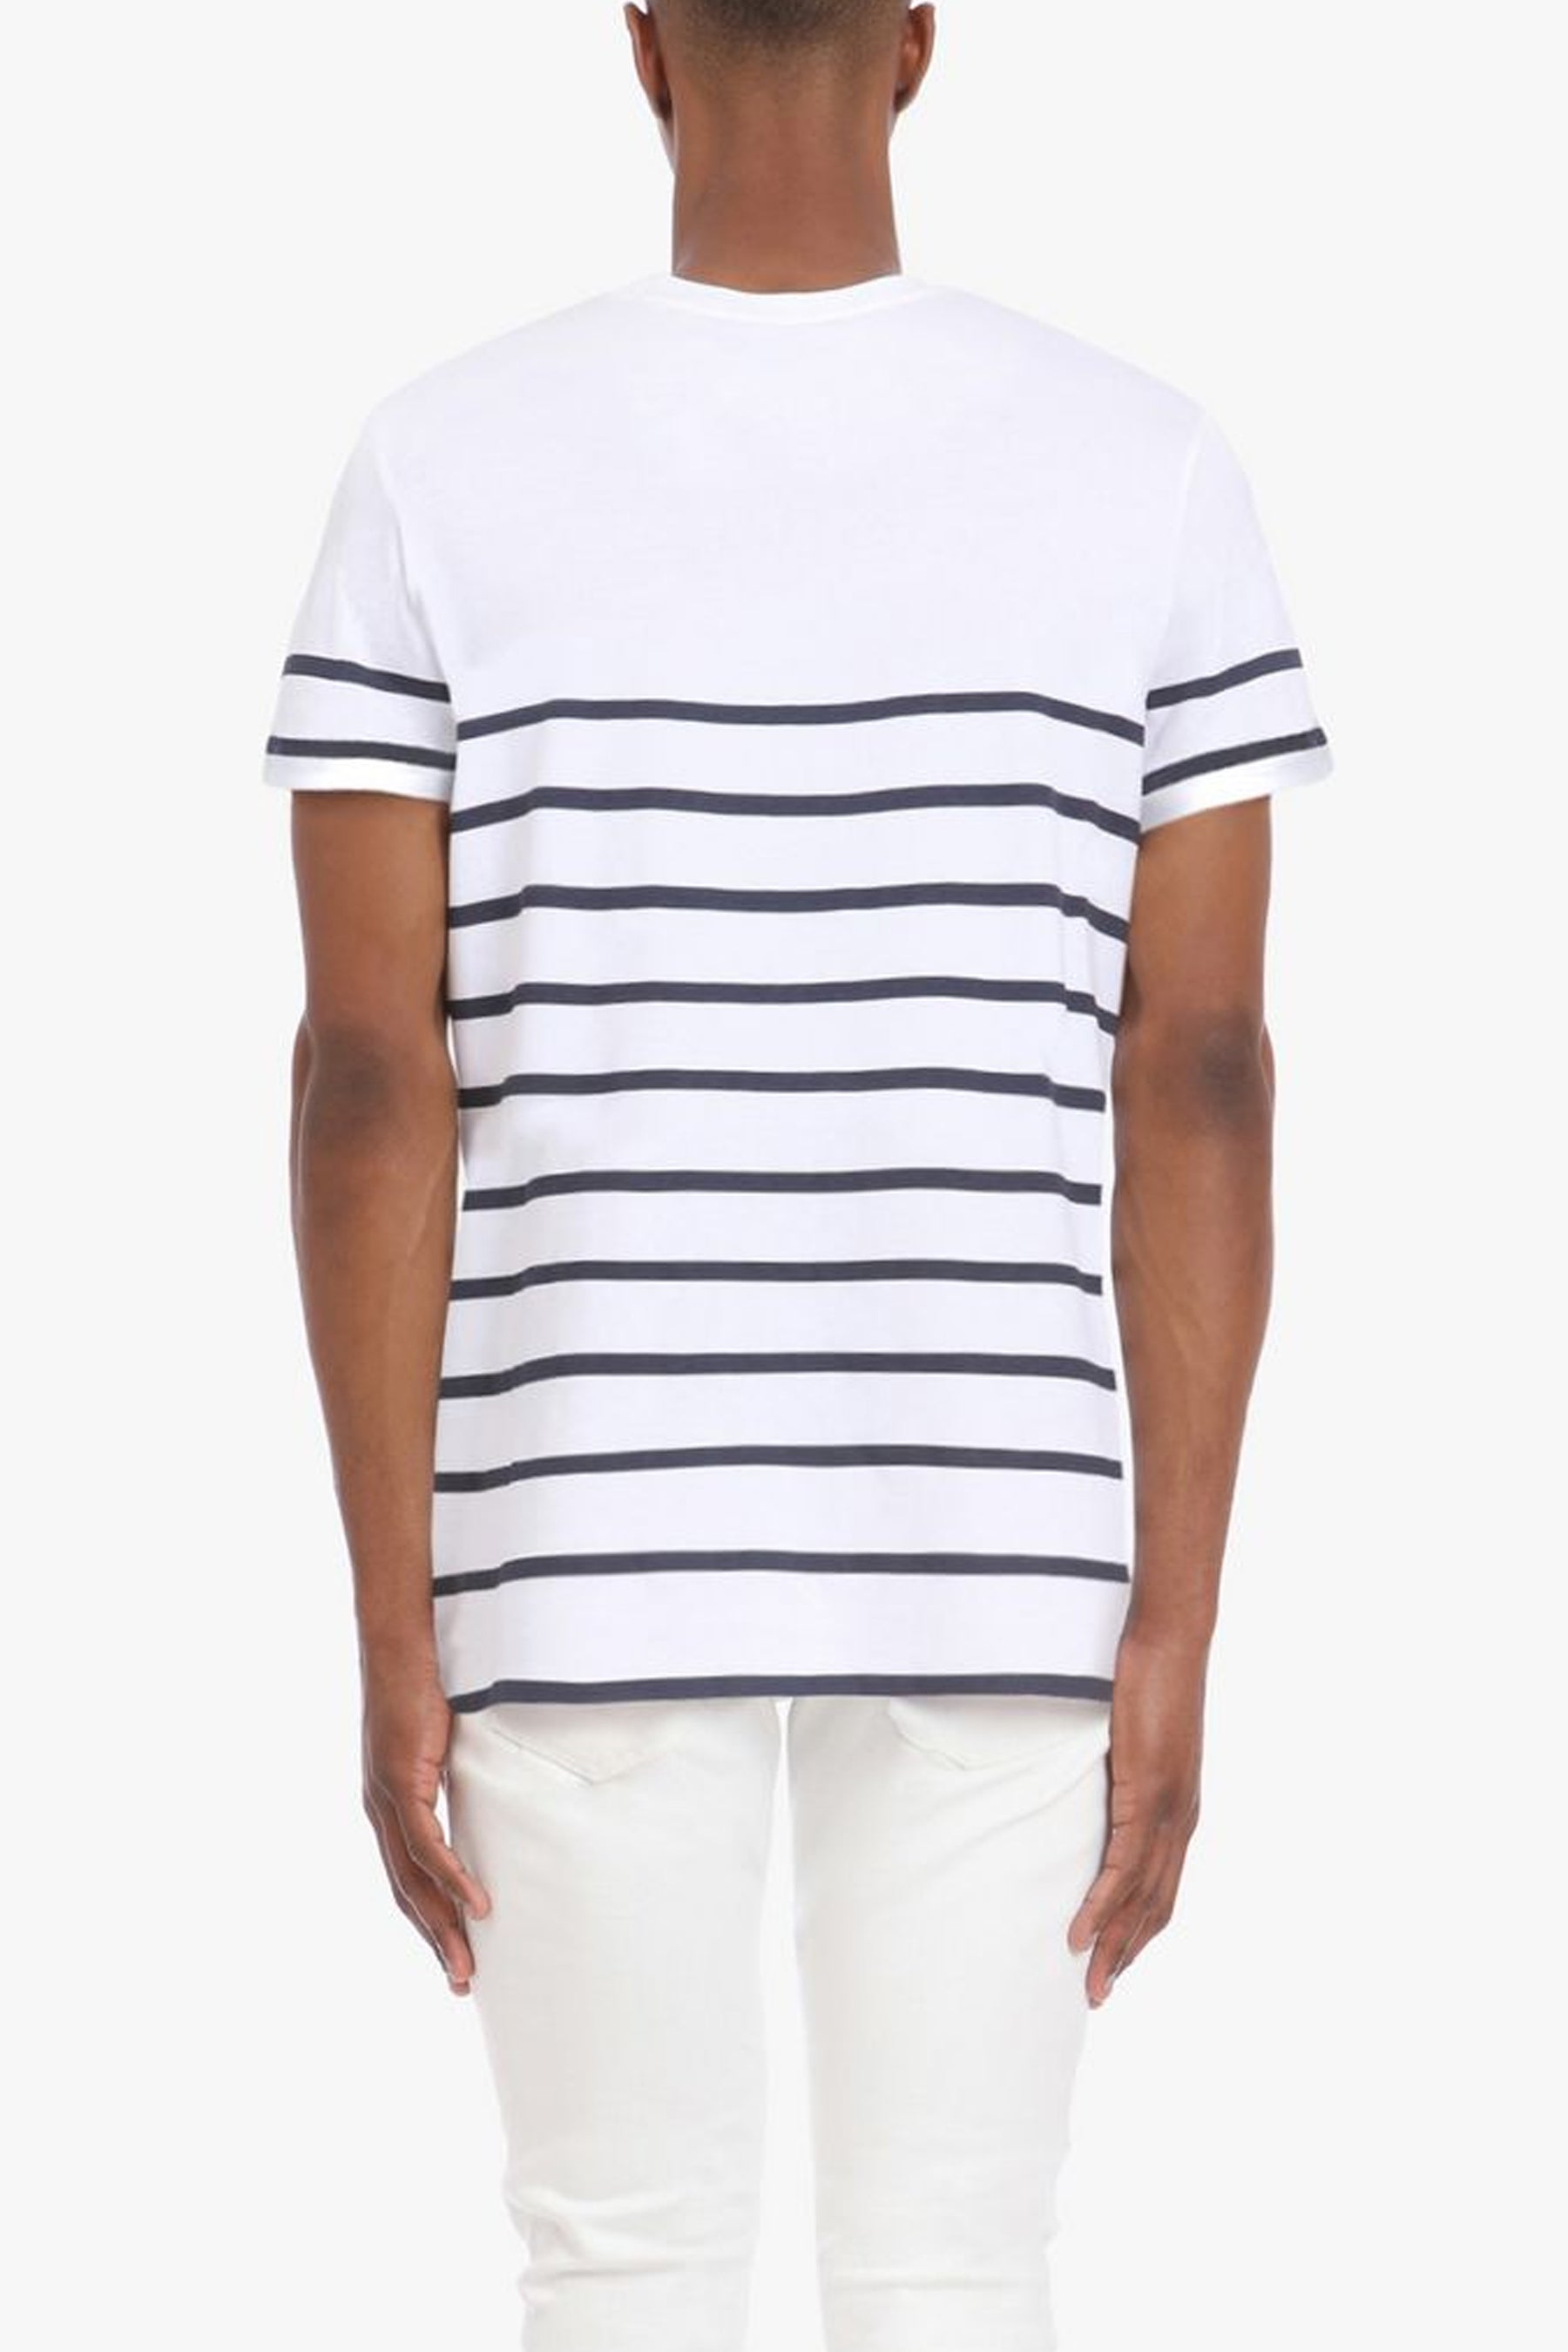 Balmain White and blue striped cotton T-shirt with black logo